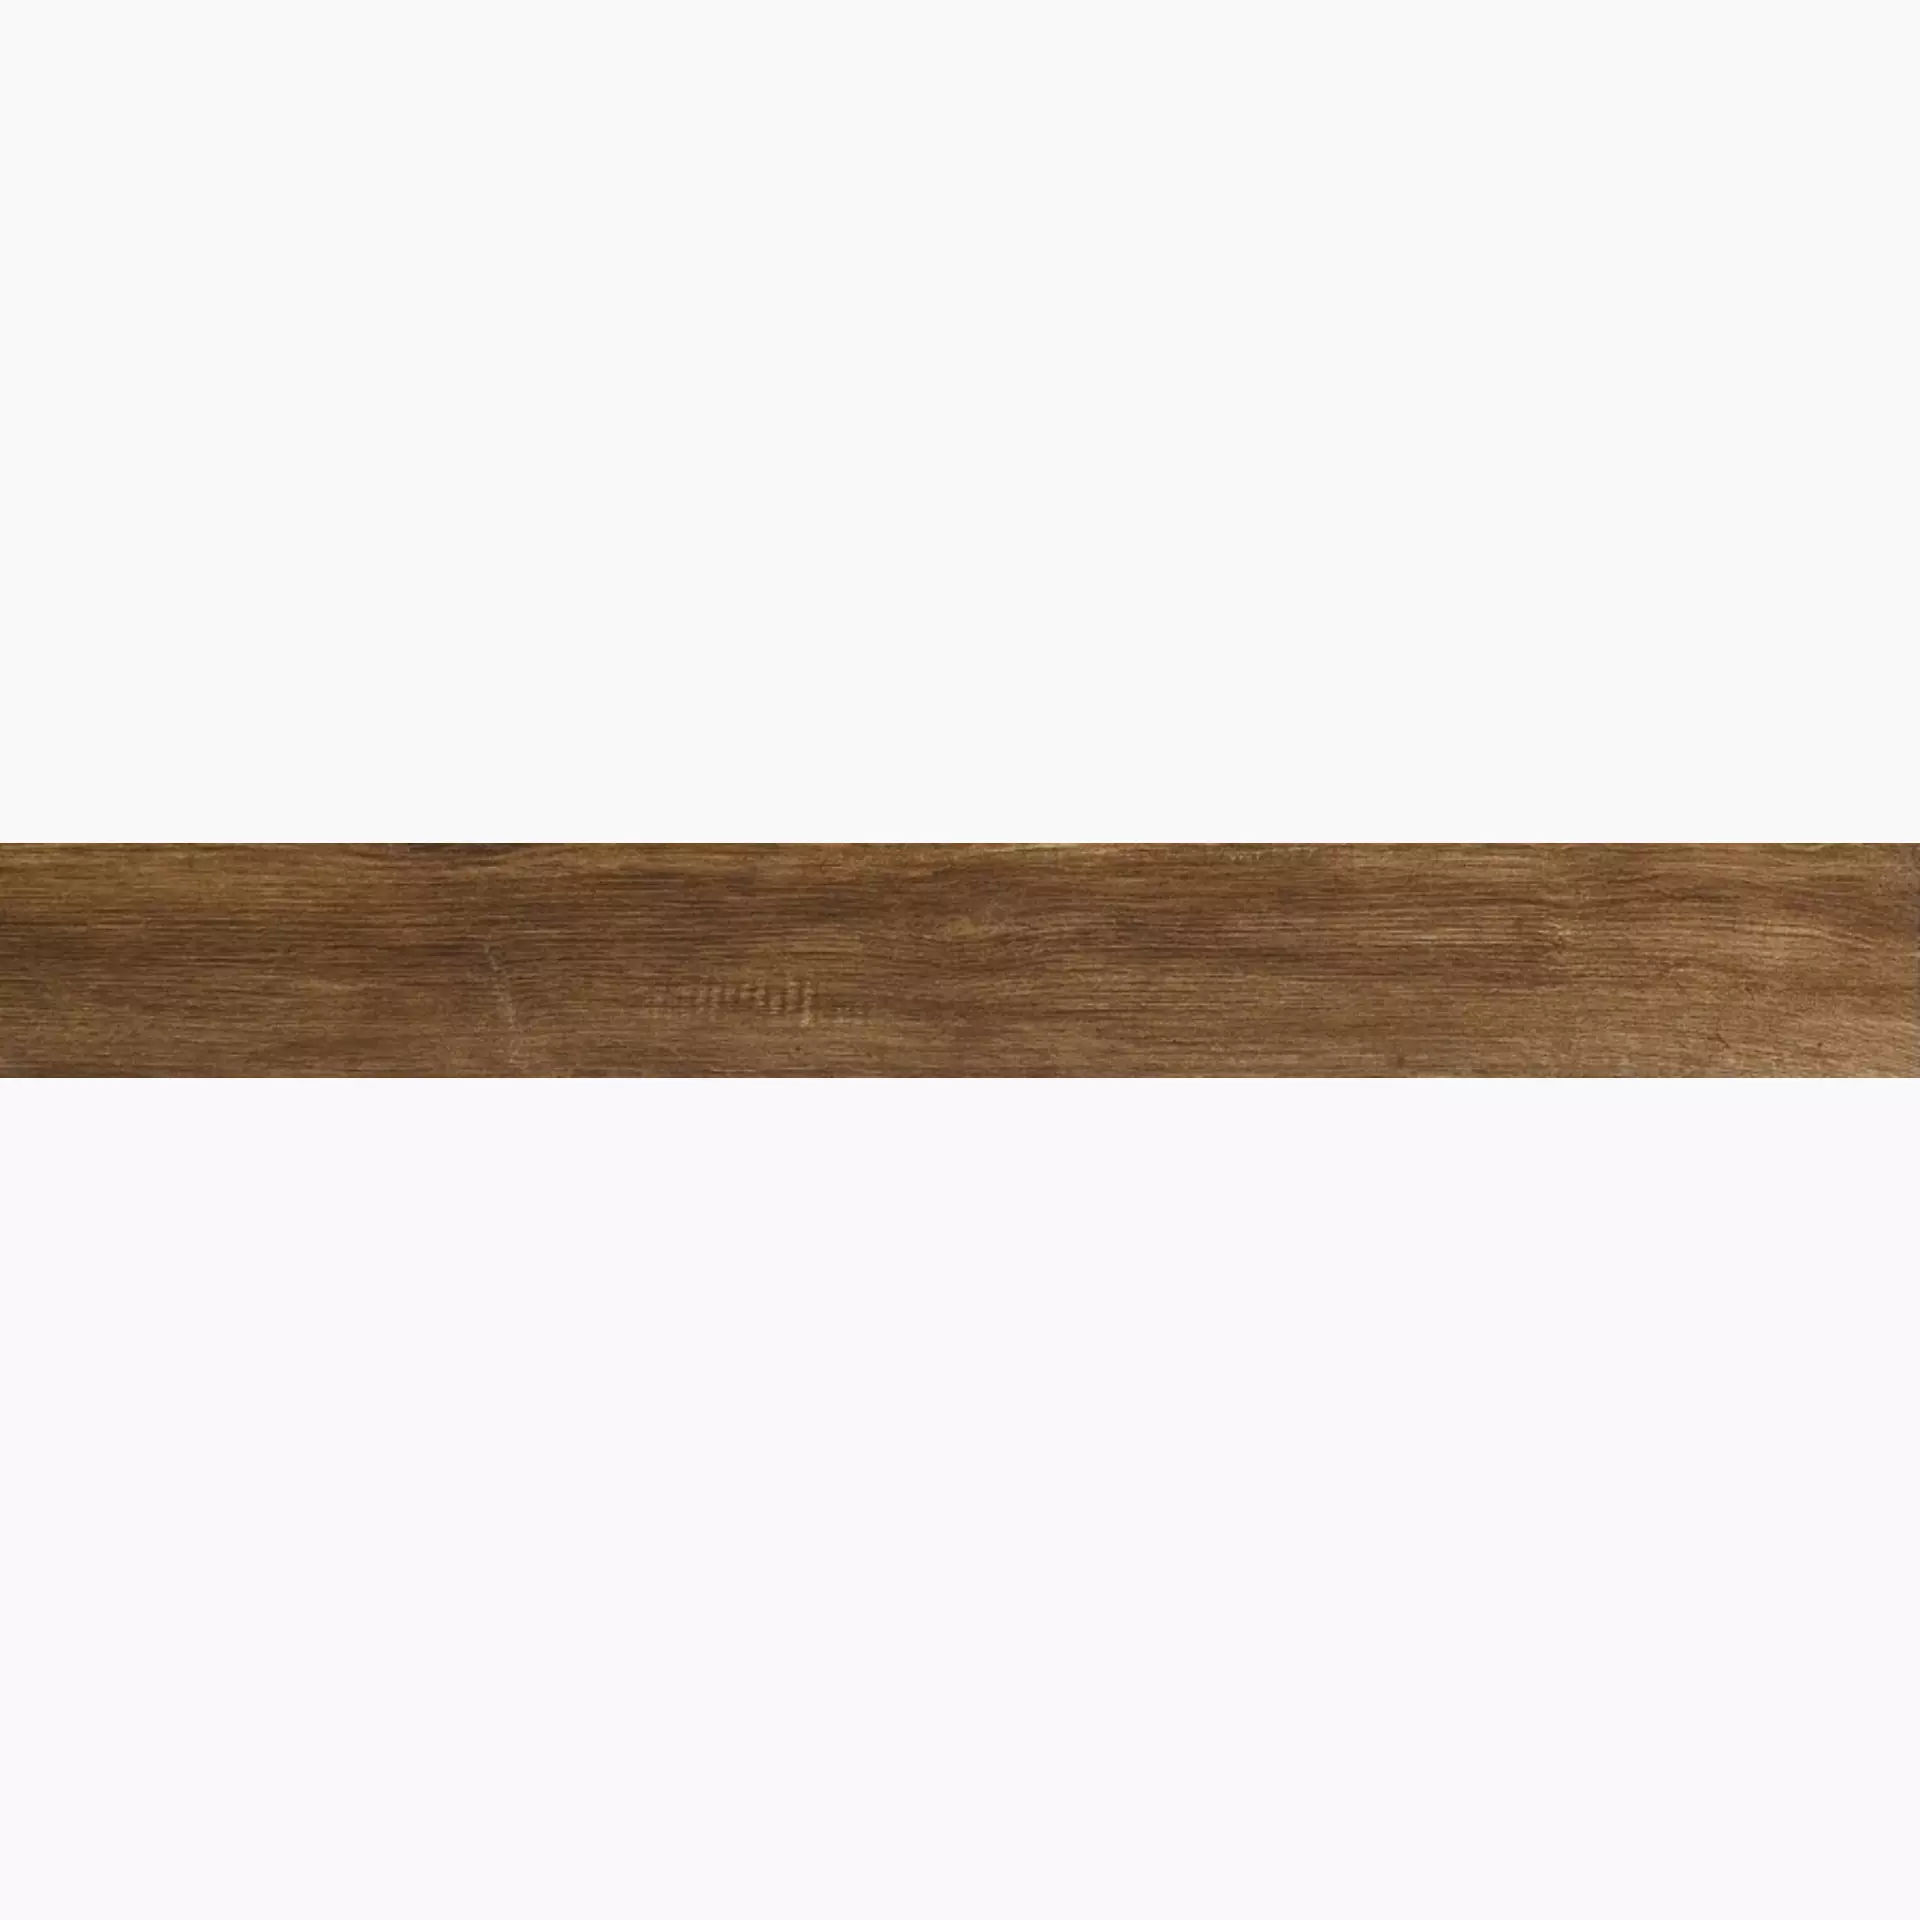 Iris E-Wood Oak Naturale 898011 11x90cm 9mm